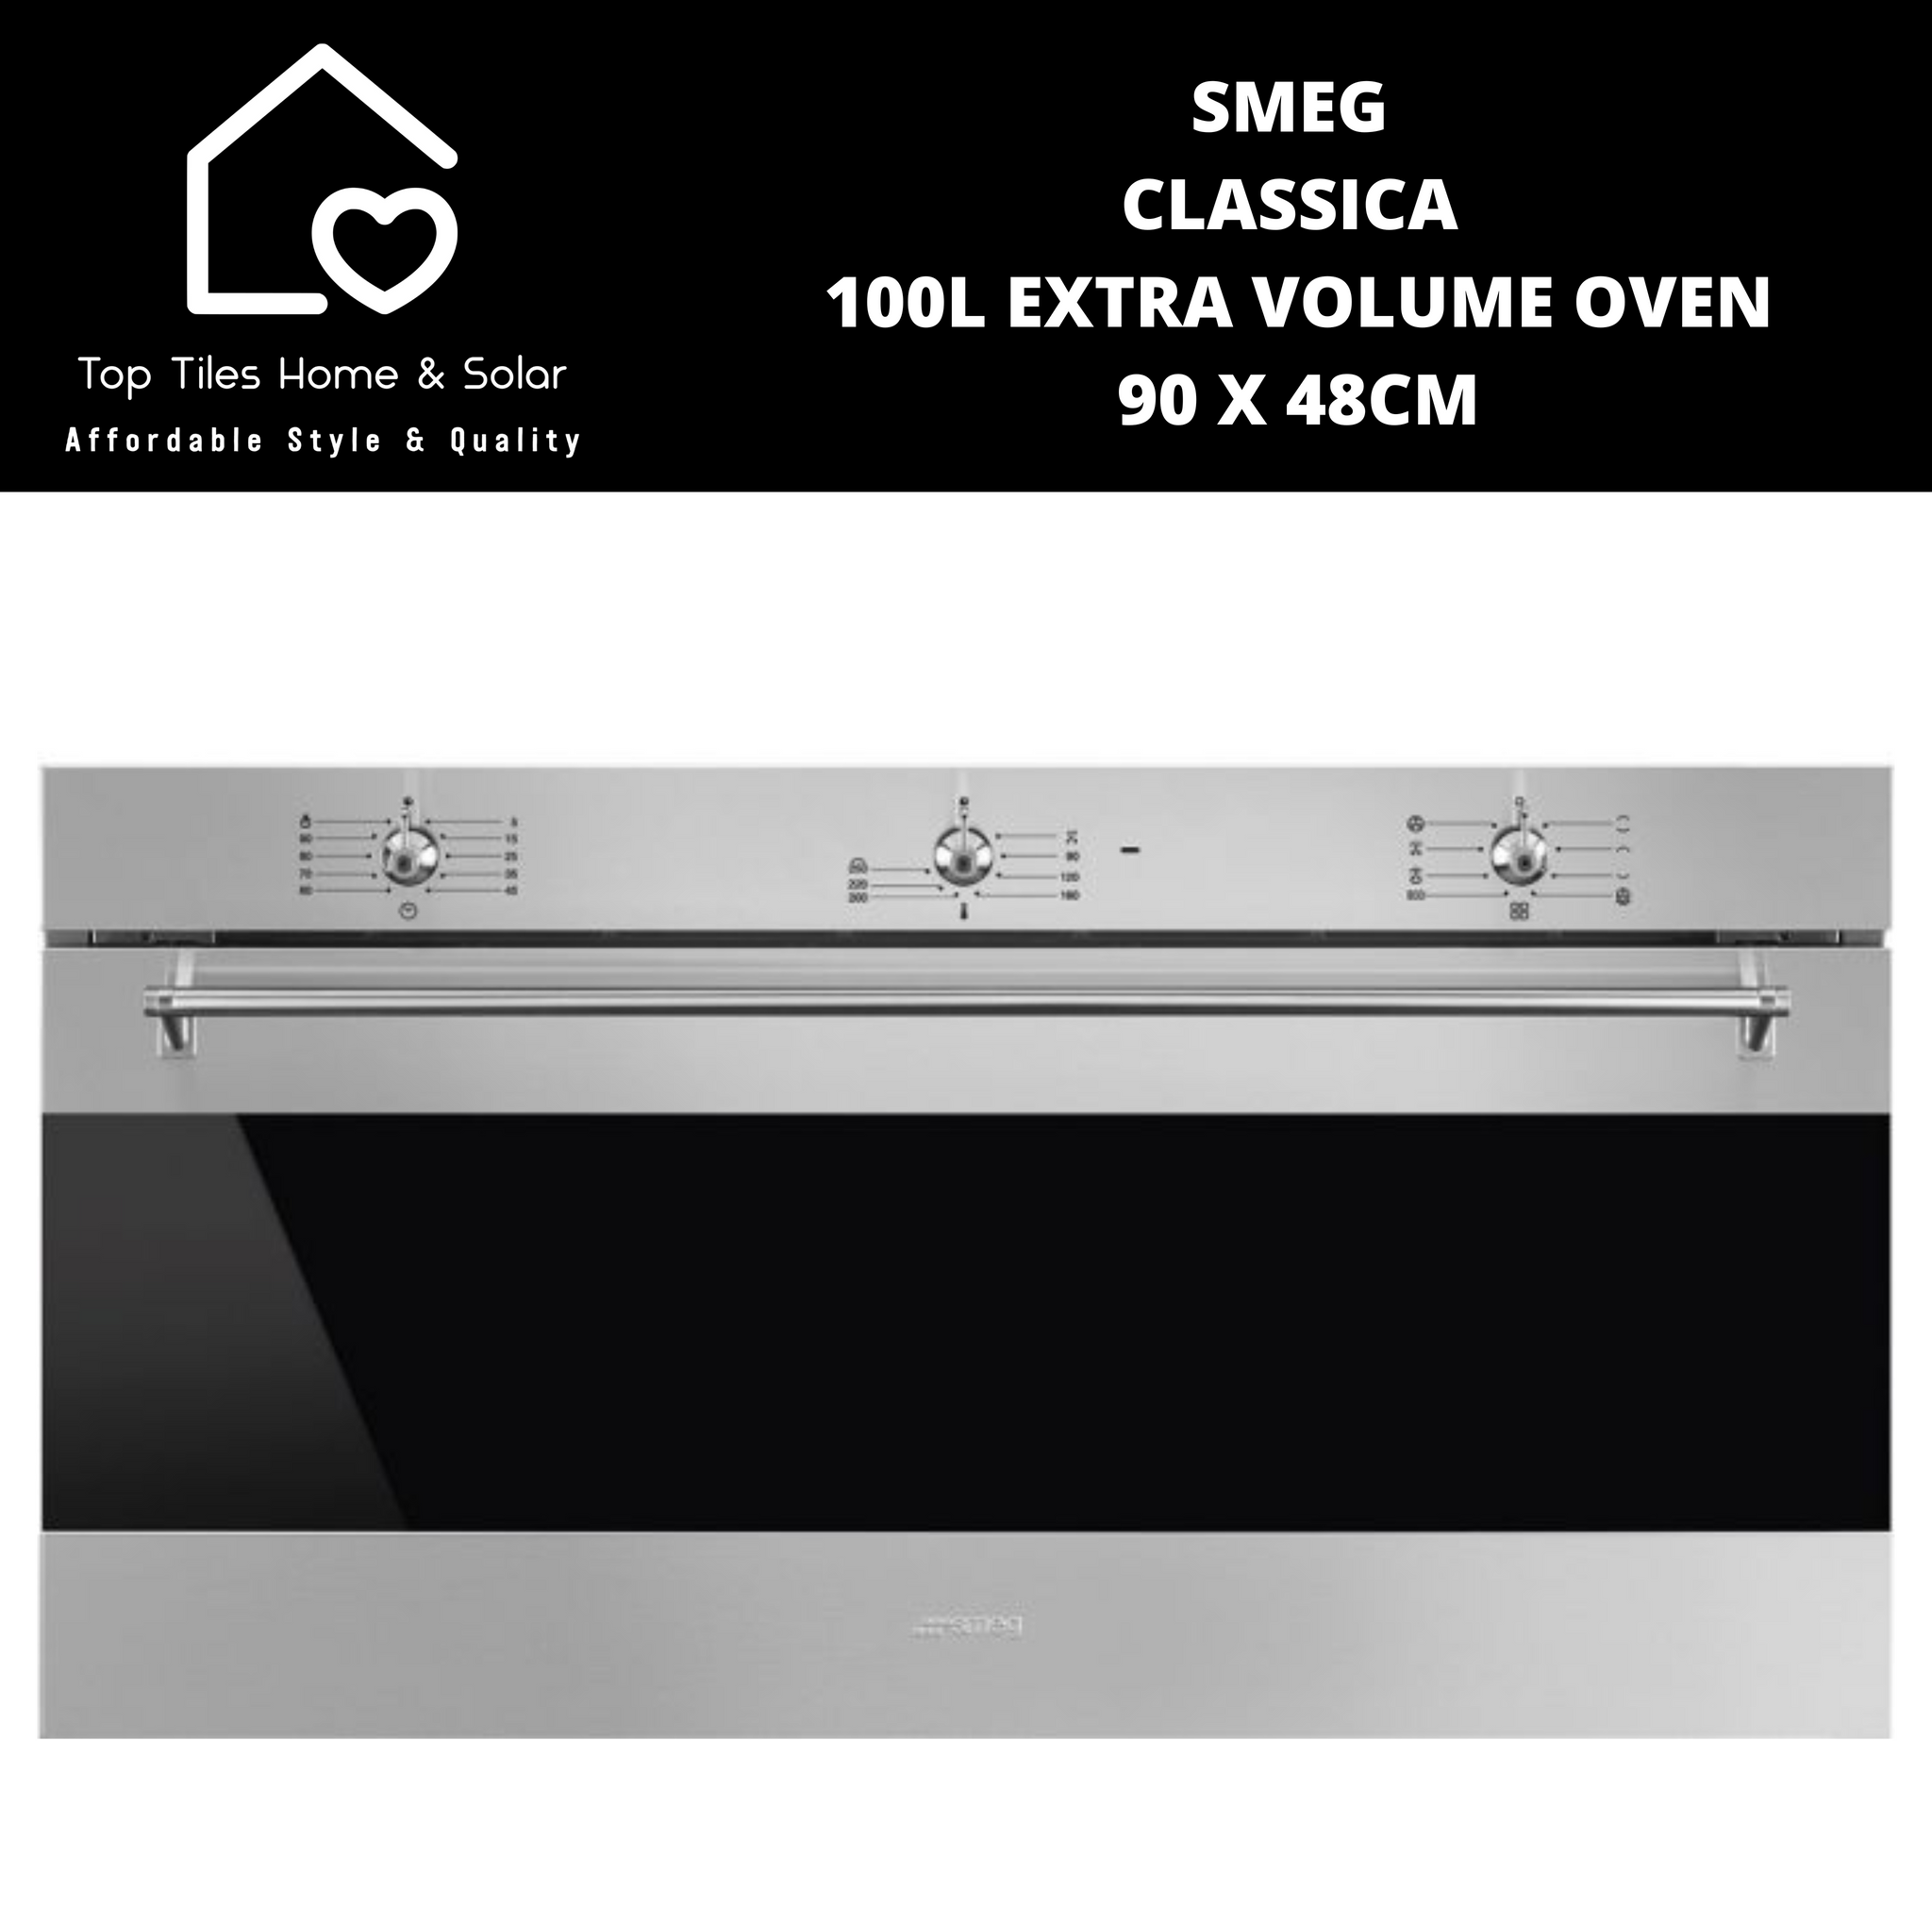 Smeg Classica 100L Extra Volume Oven – 90 x 48cm